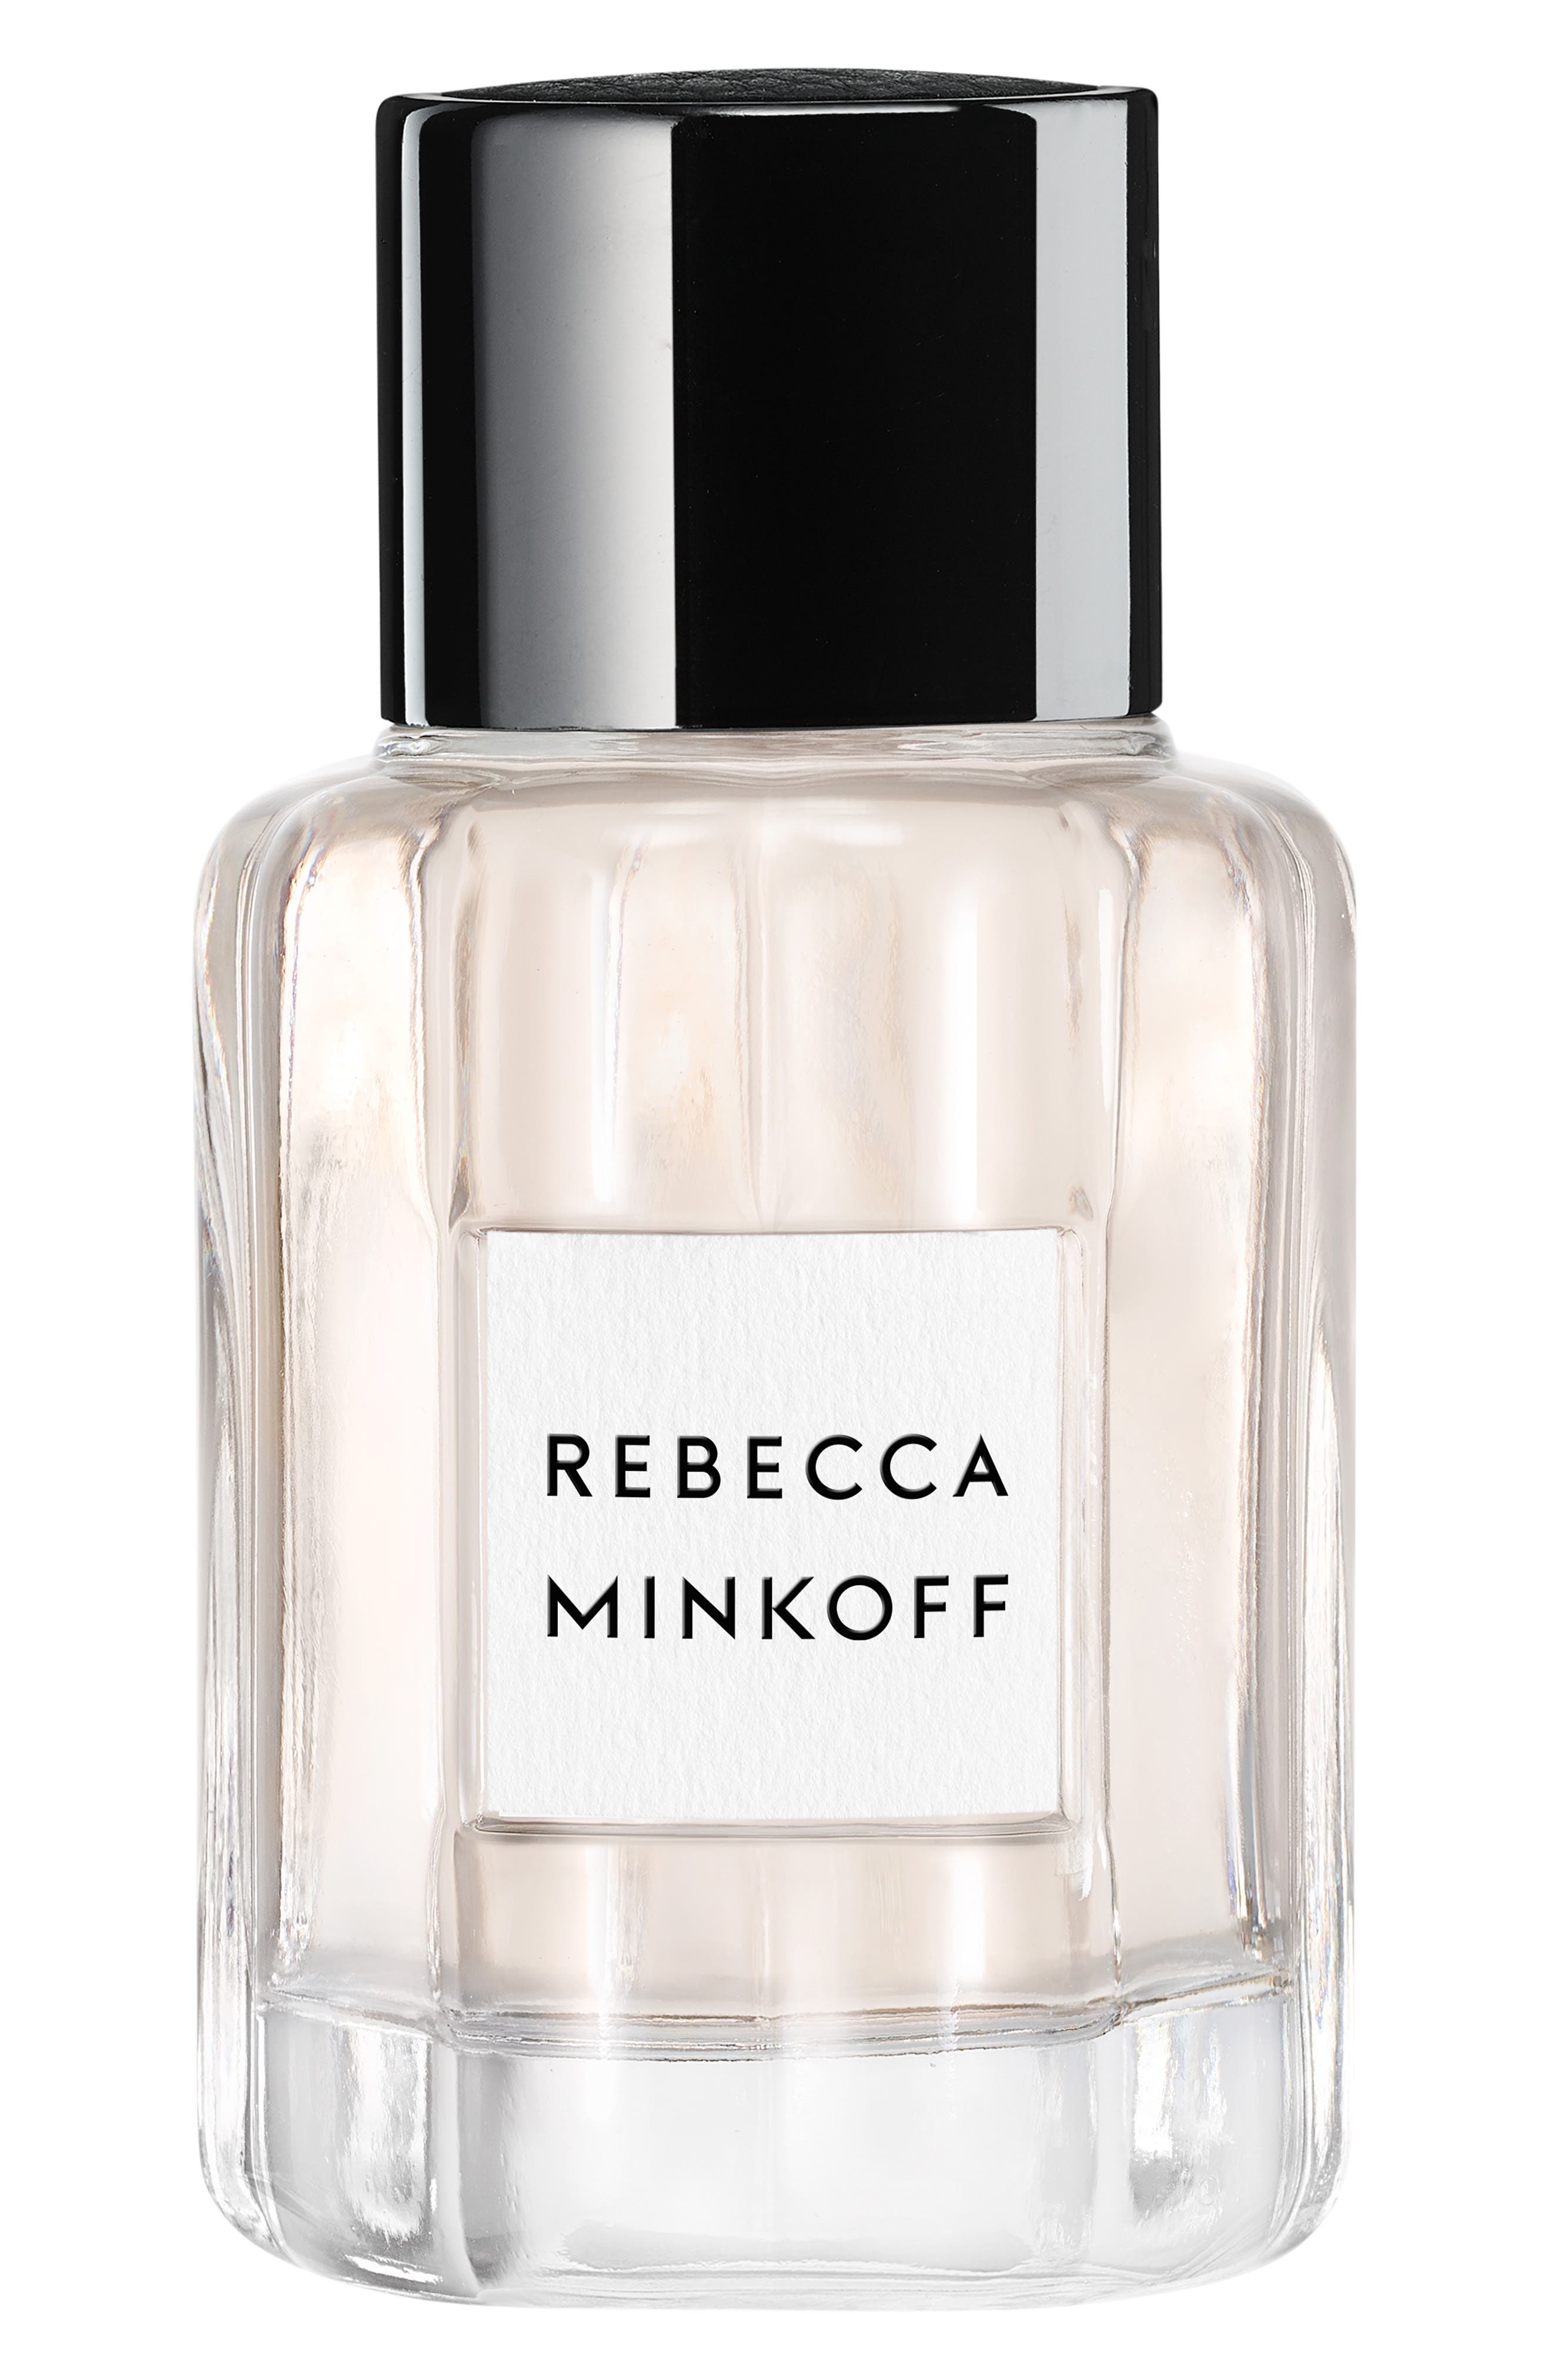 Rebecca Minkoff Eau de Parfum in Regular at Nordstrom, Size 3.4 Oz